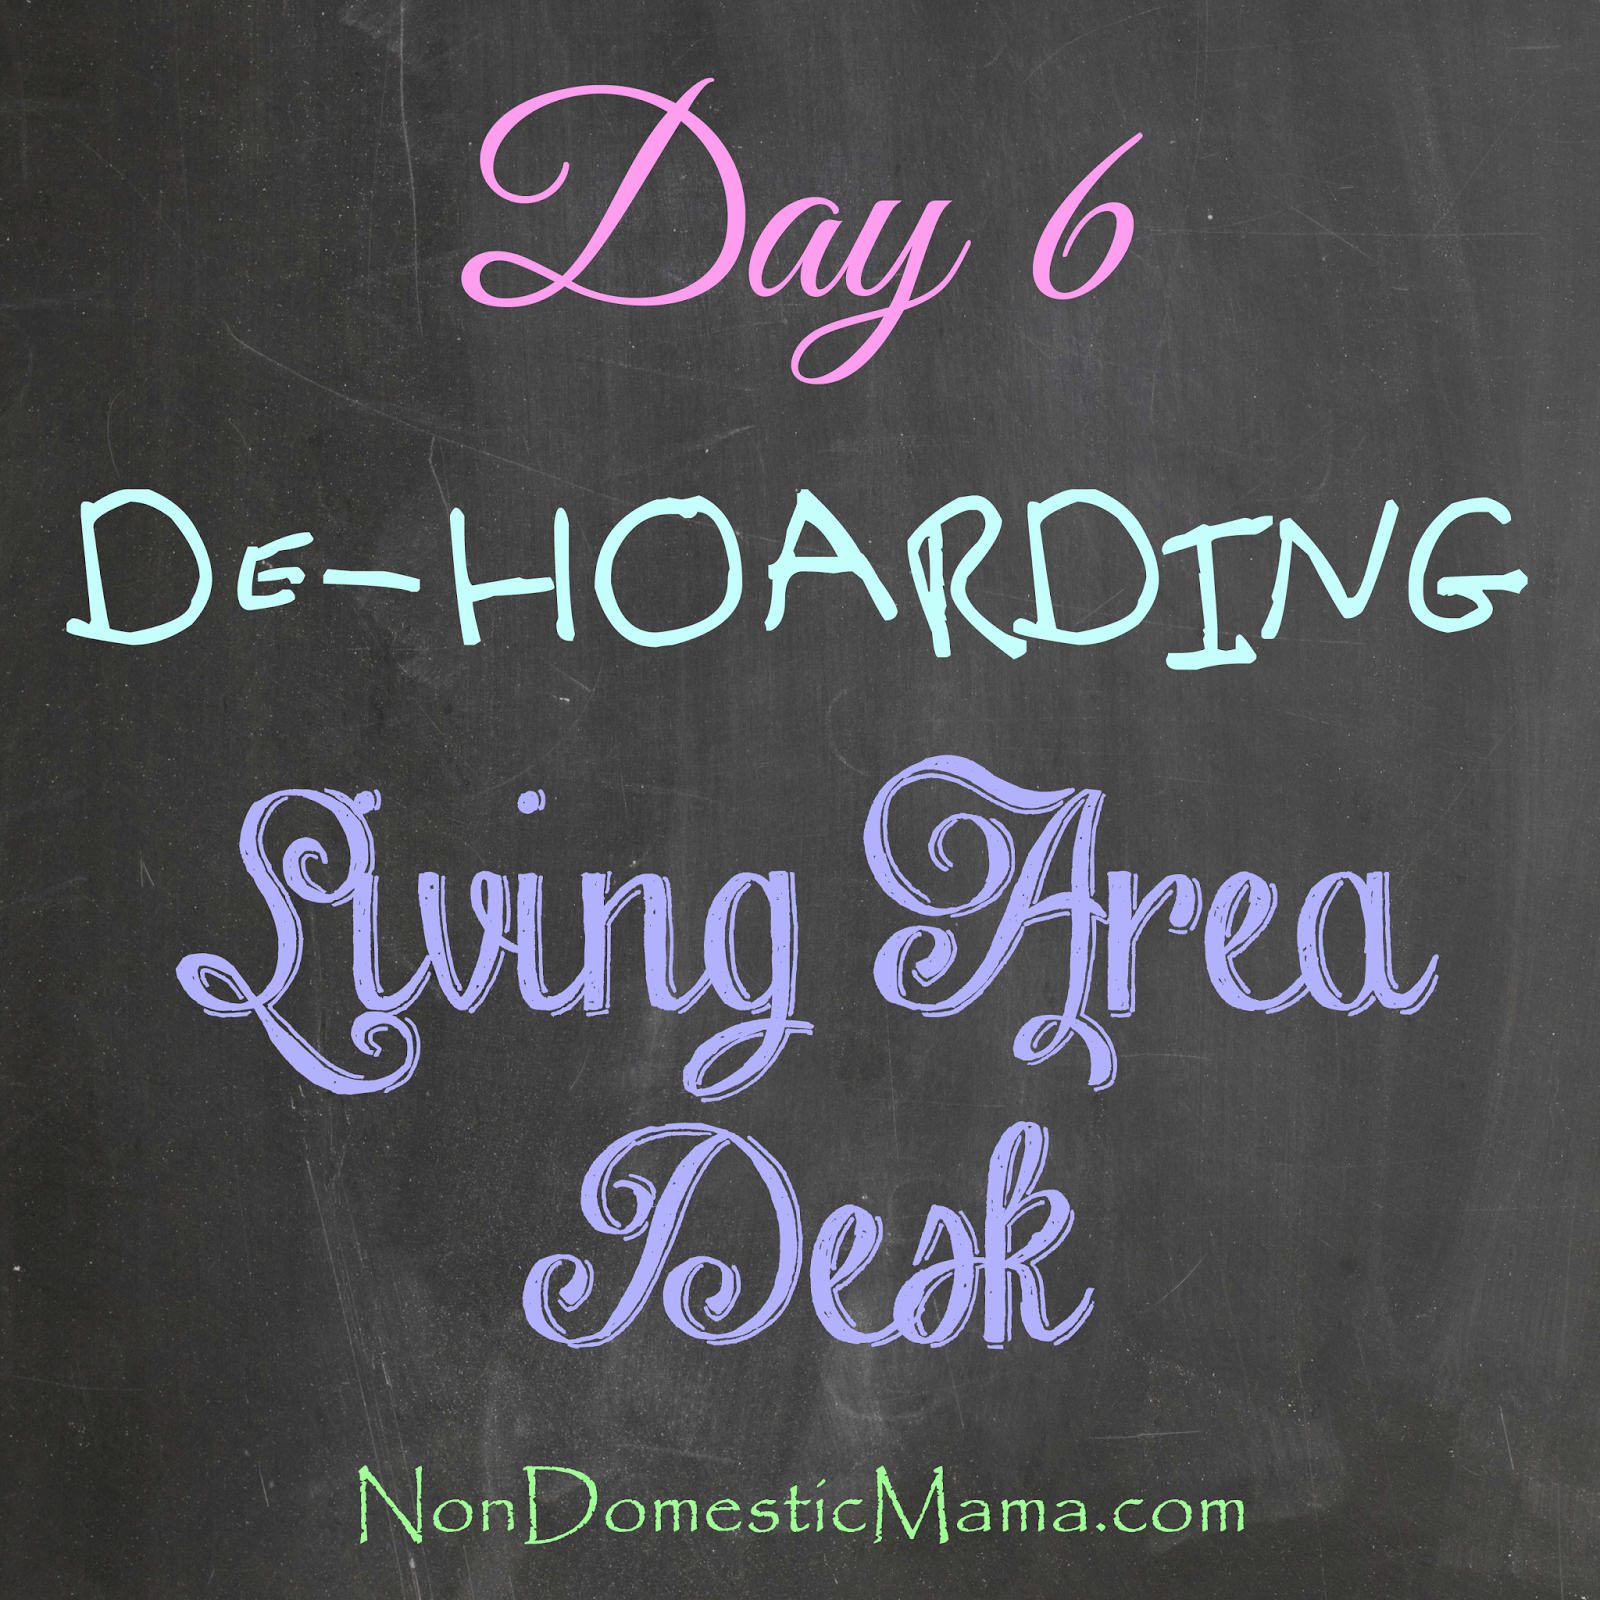 {Day 6} Living Area Desk - 31 Days of De-Hoarding #write31days